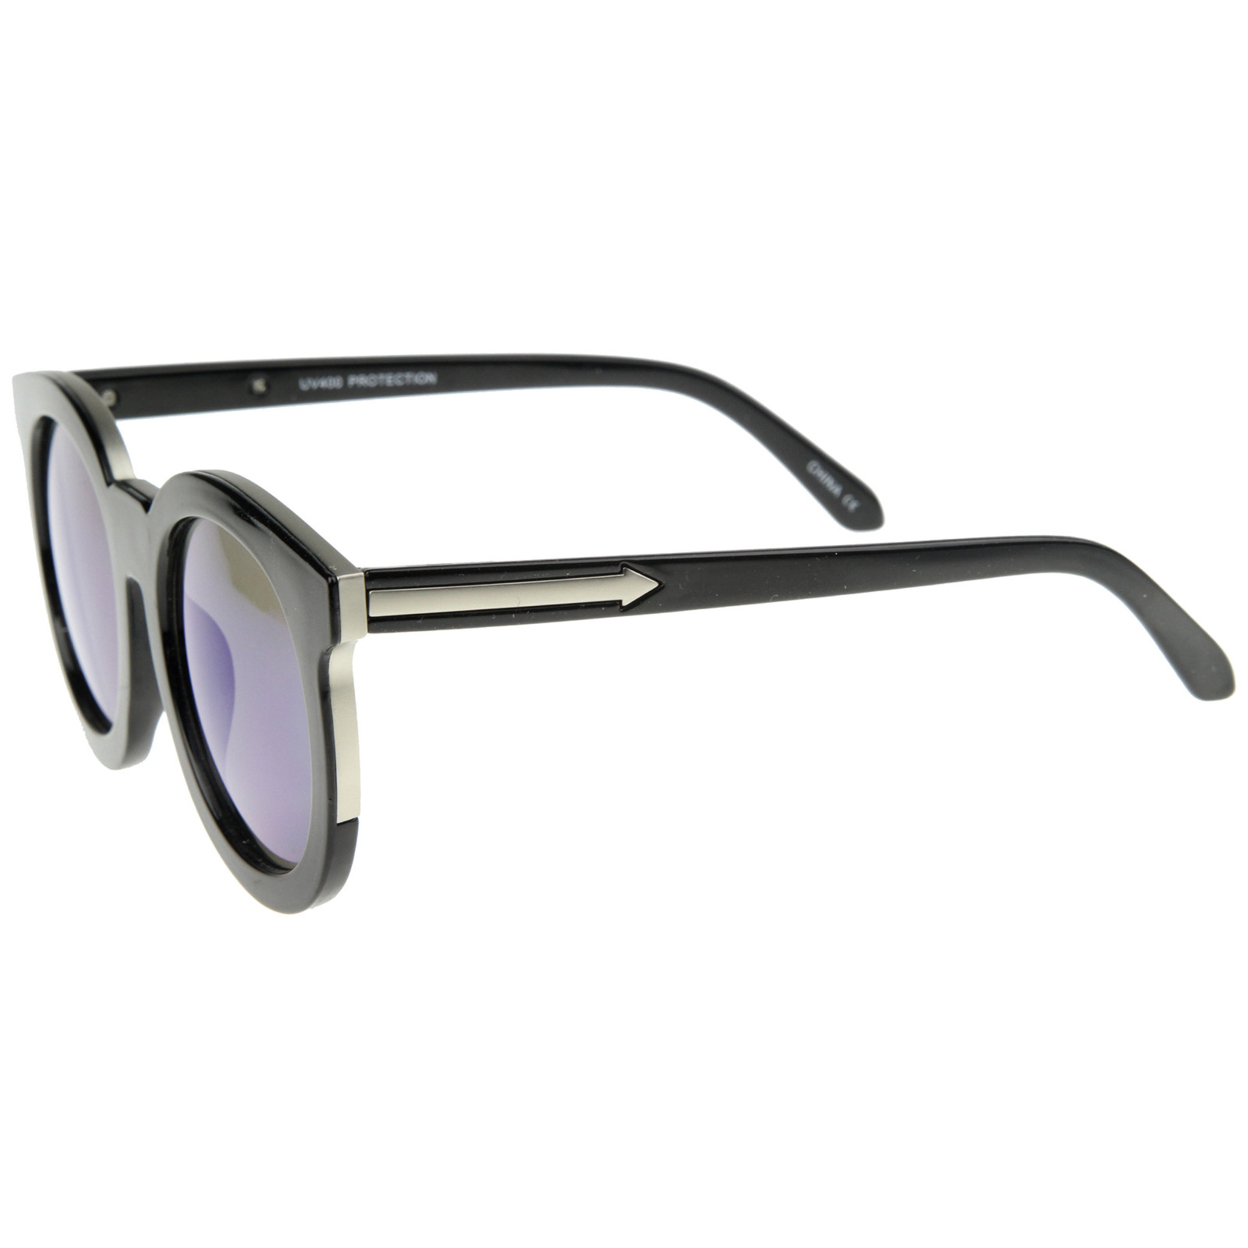 Women's Fashion Oversized Flash Mirrored Flat Lens Round Sunglasses 64mm - Shiny Black-Silver / Blue Mirror